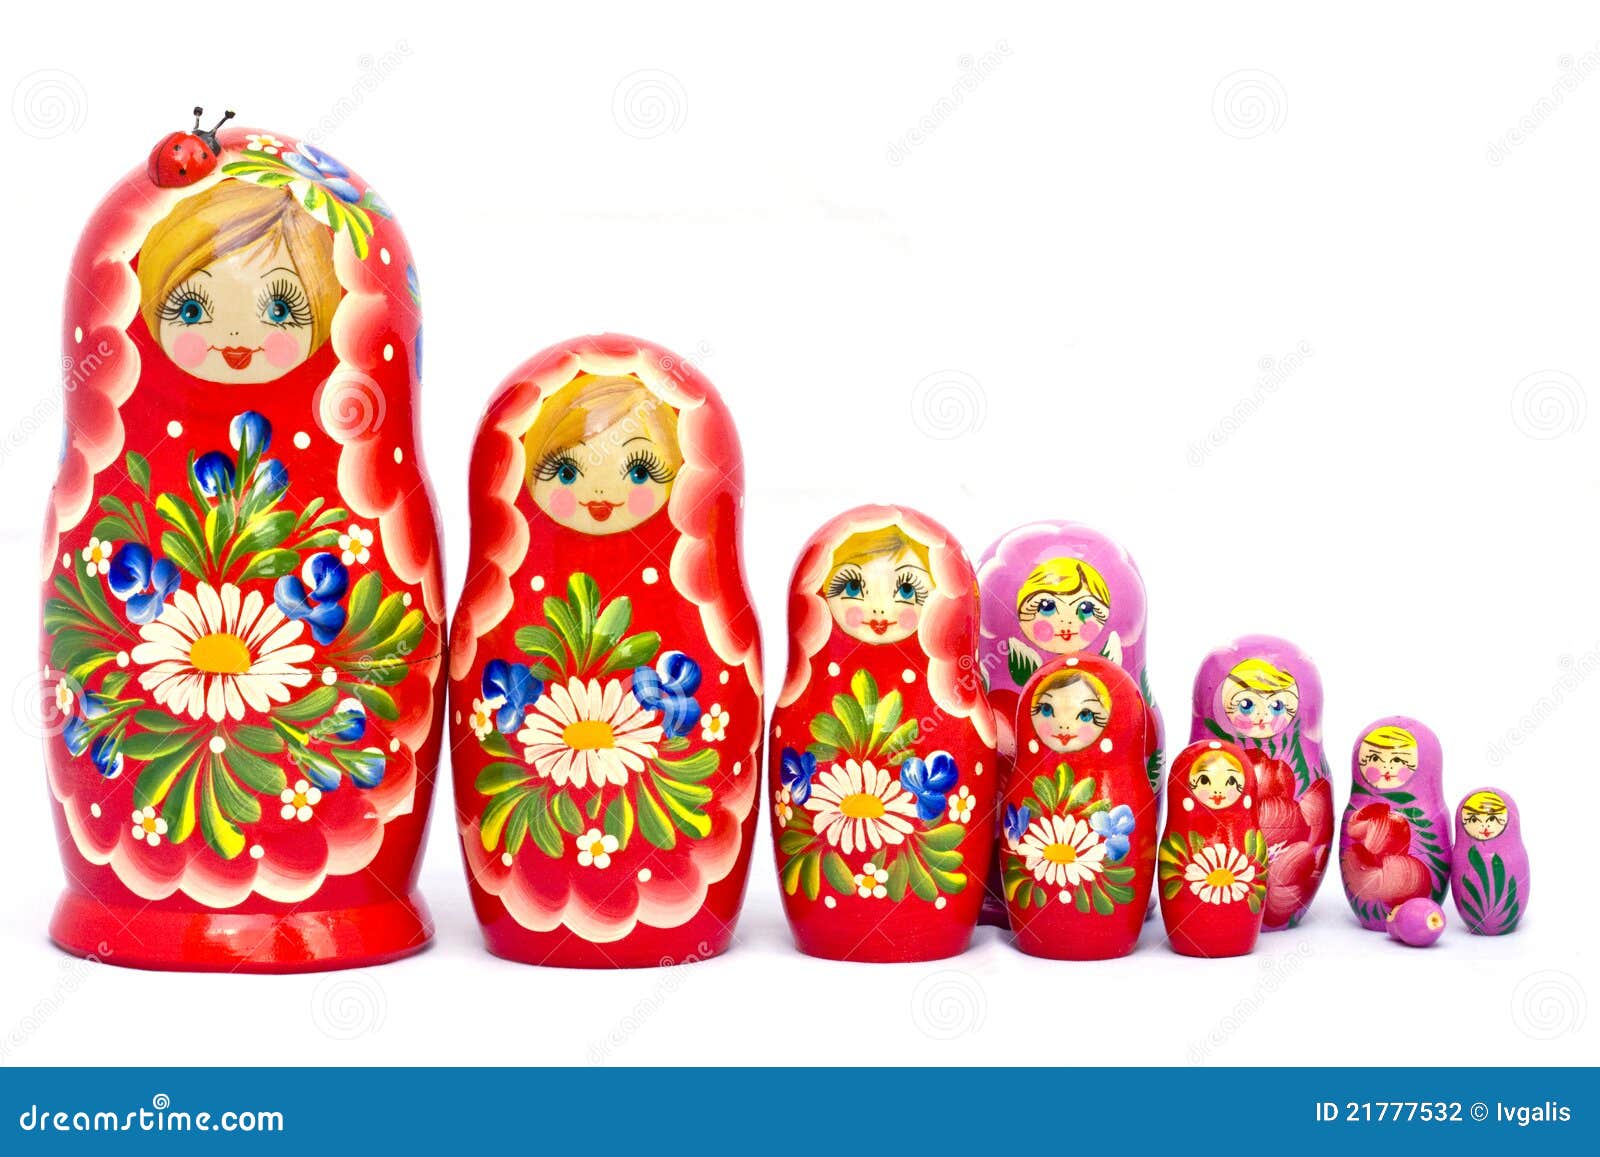 russian doll clip art free - photo #28